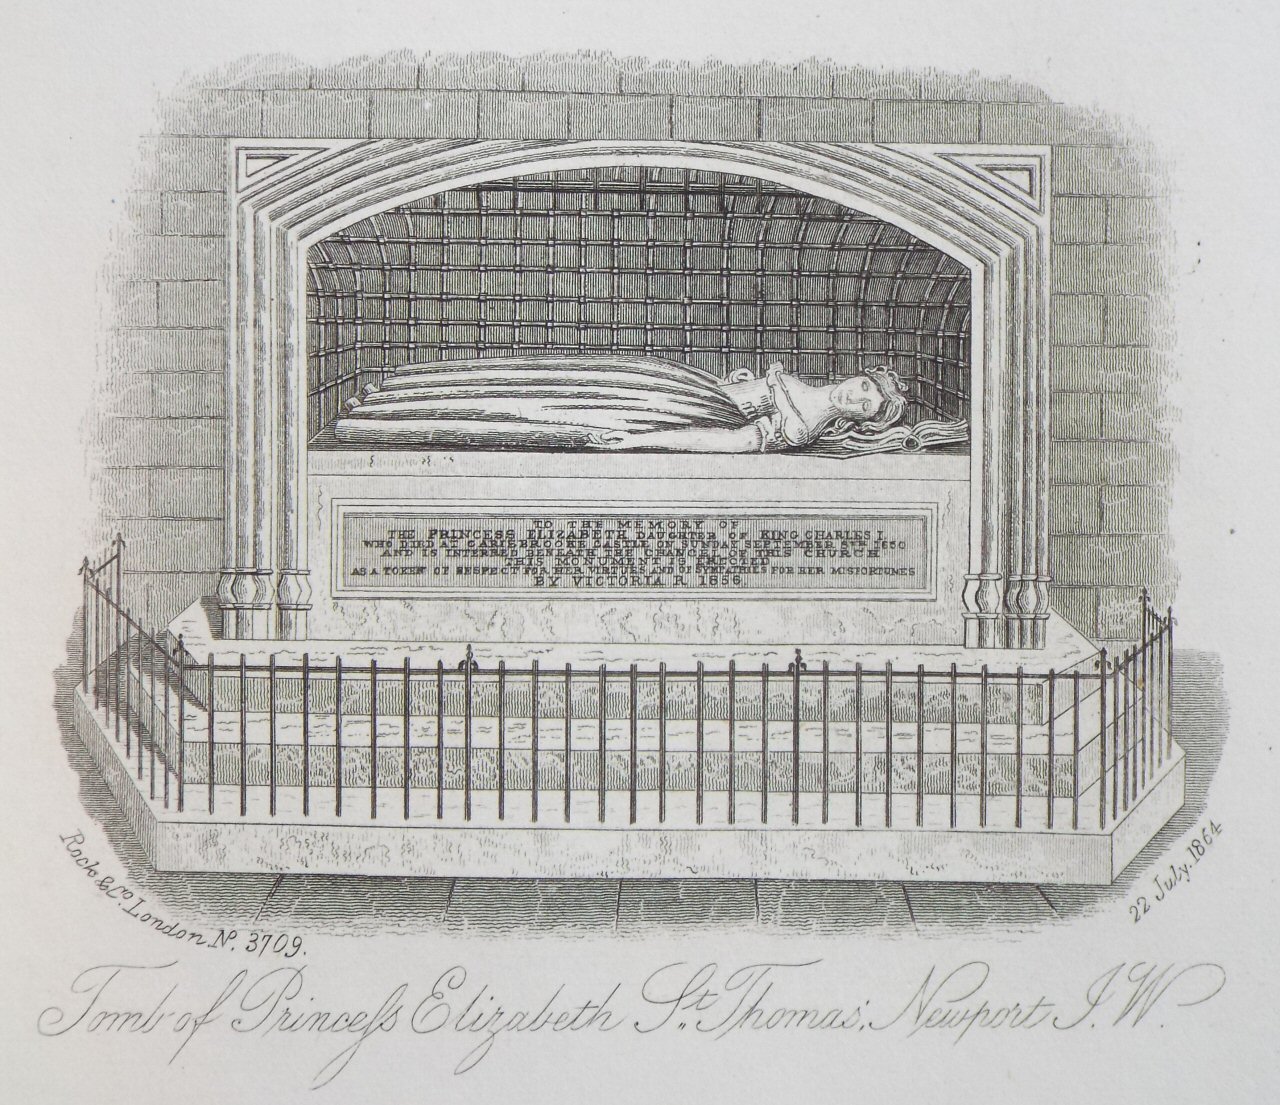 Steel Vignette - Tomb of Princess Elizabeth, St. Thomas', I. W. - Rock